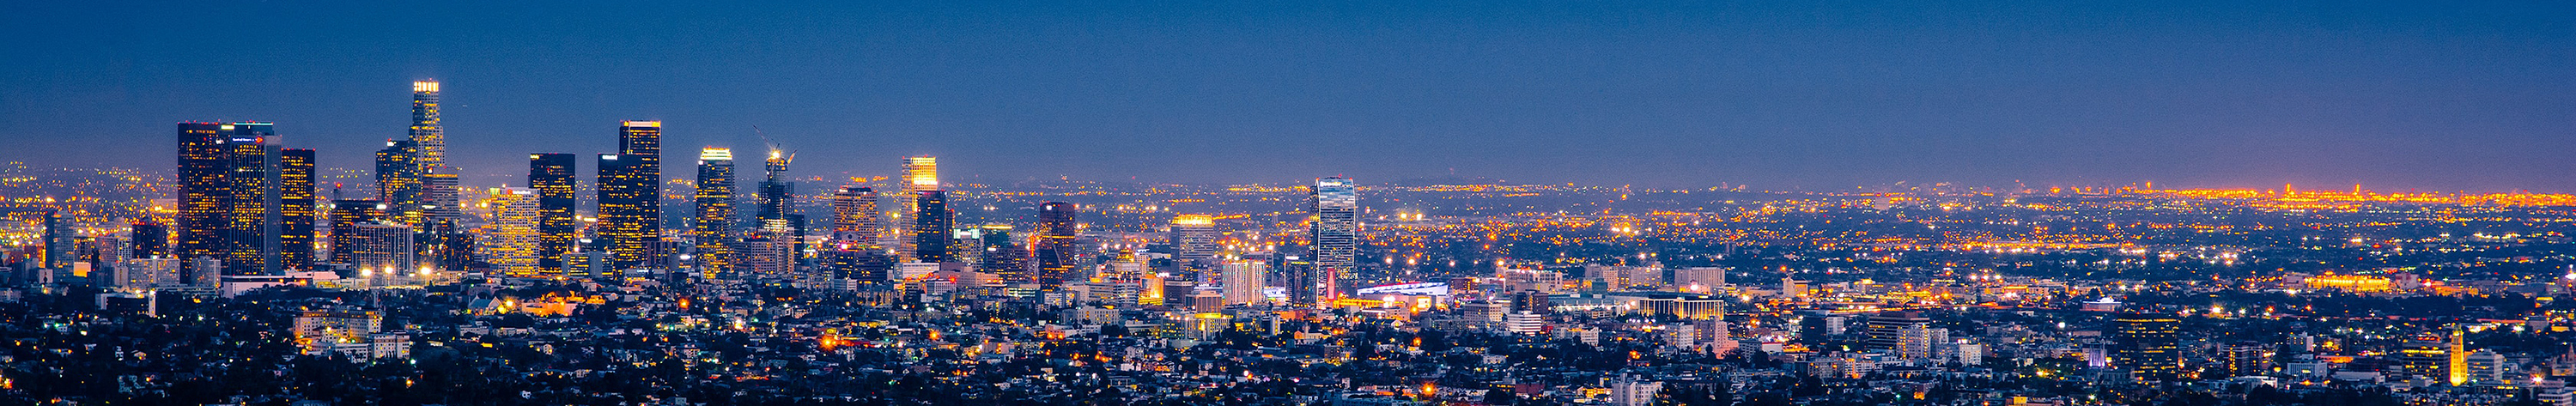 Los Angeles night view